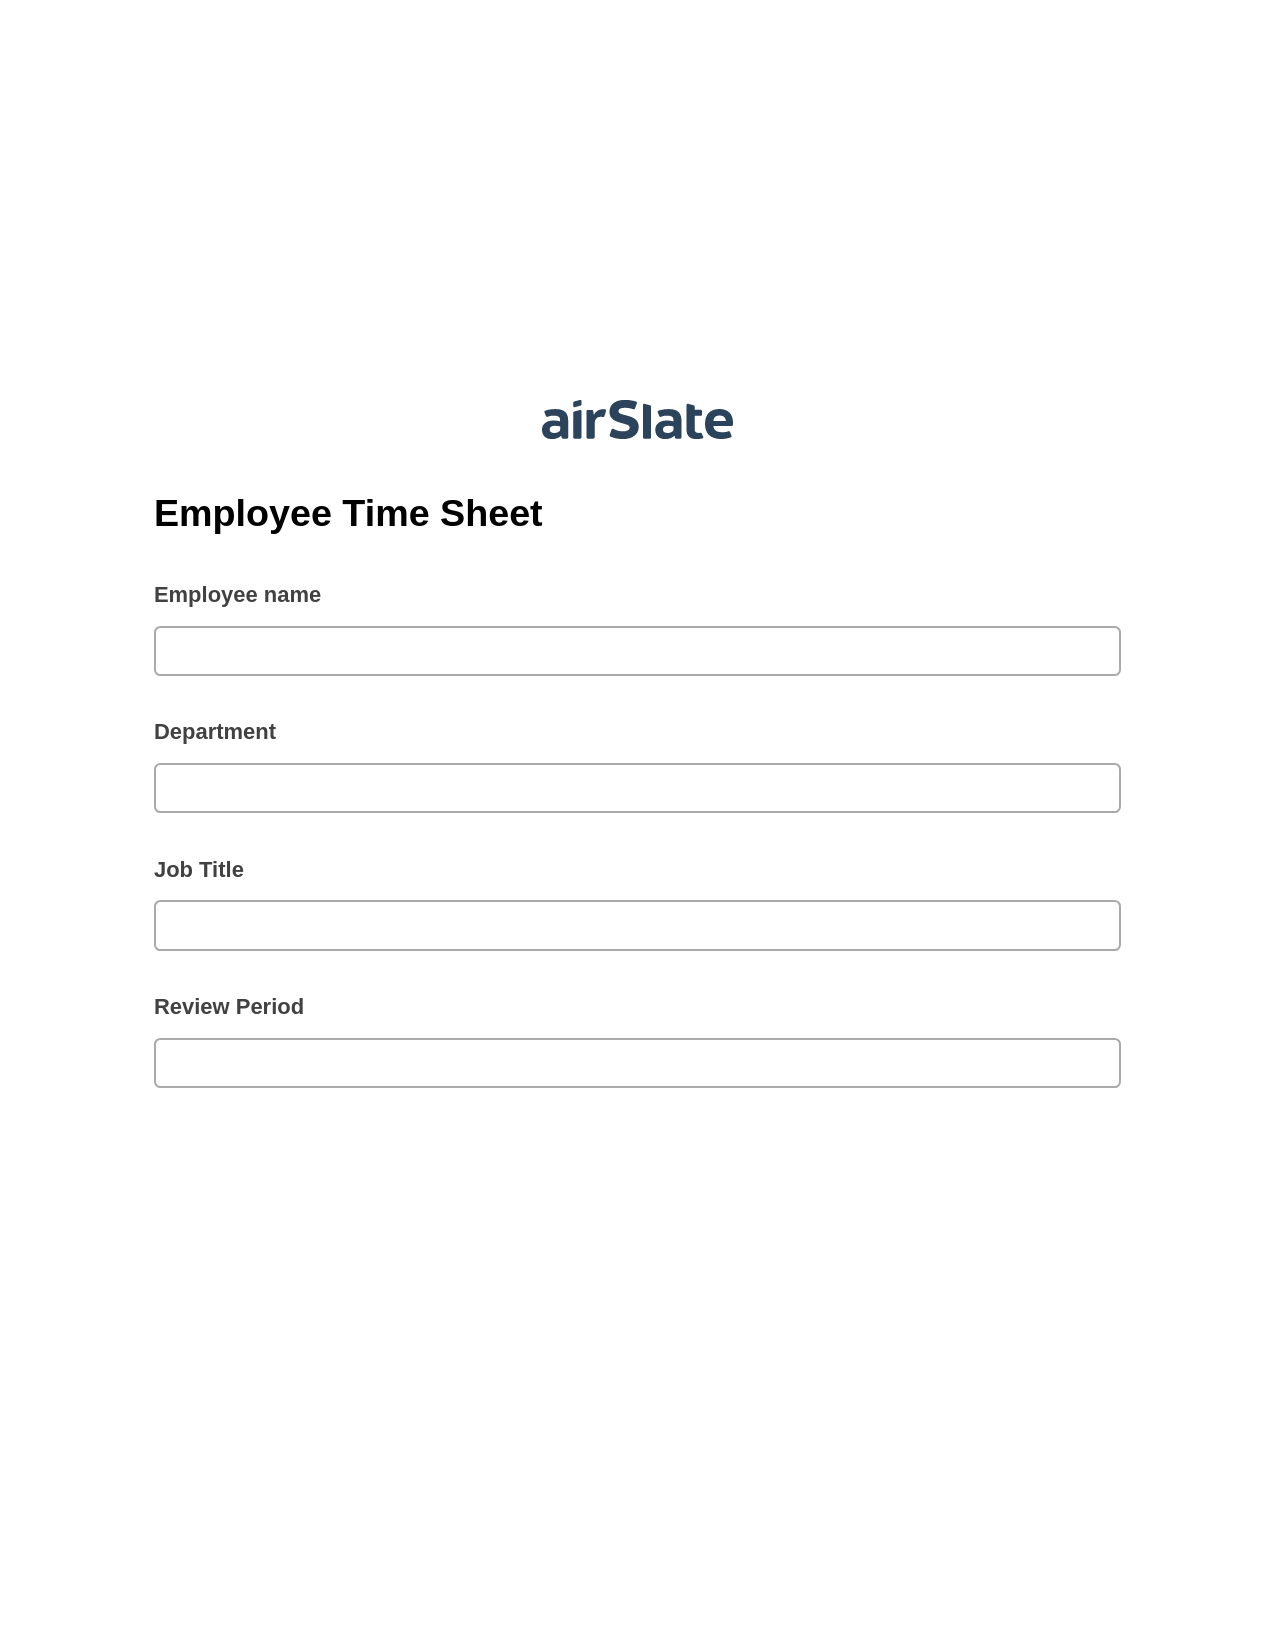 Multirole Employee Time Sheet Pre-fill from Smartsheet Bot, Update Audit Trail Bot, Export to WebMerge Bot